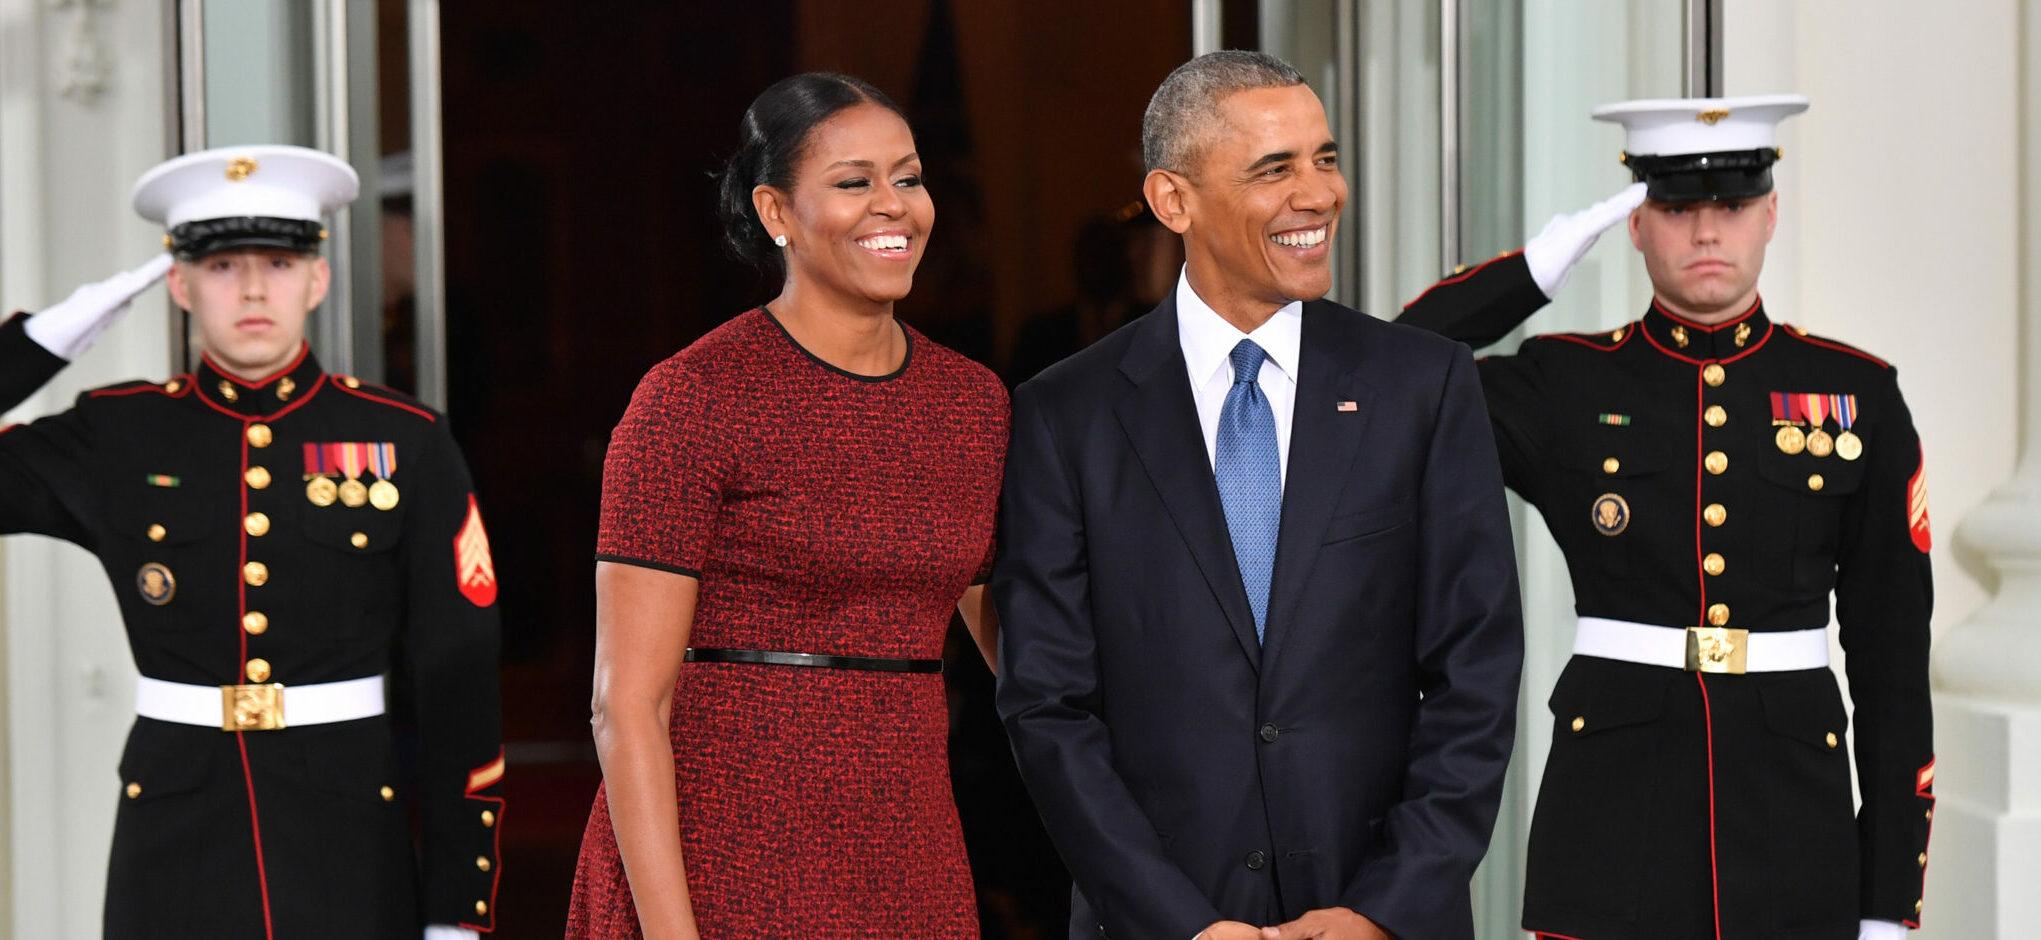 Proud Michelle Obama Celebrates ‘Honey’ Barack Obama On 61st Birthday: ‘Love You’